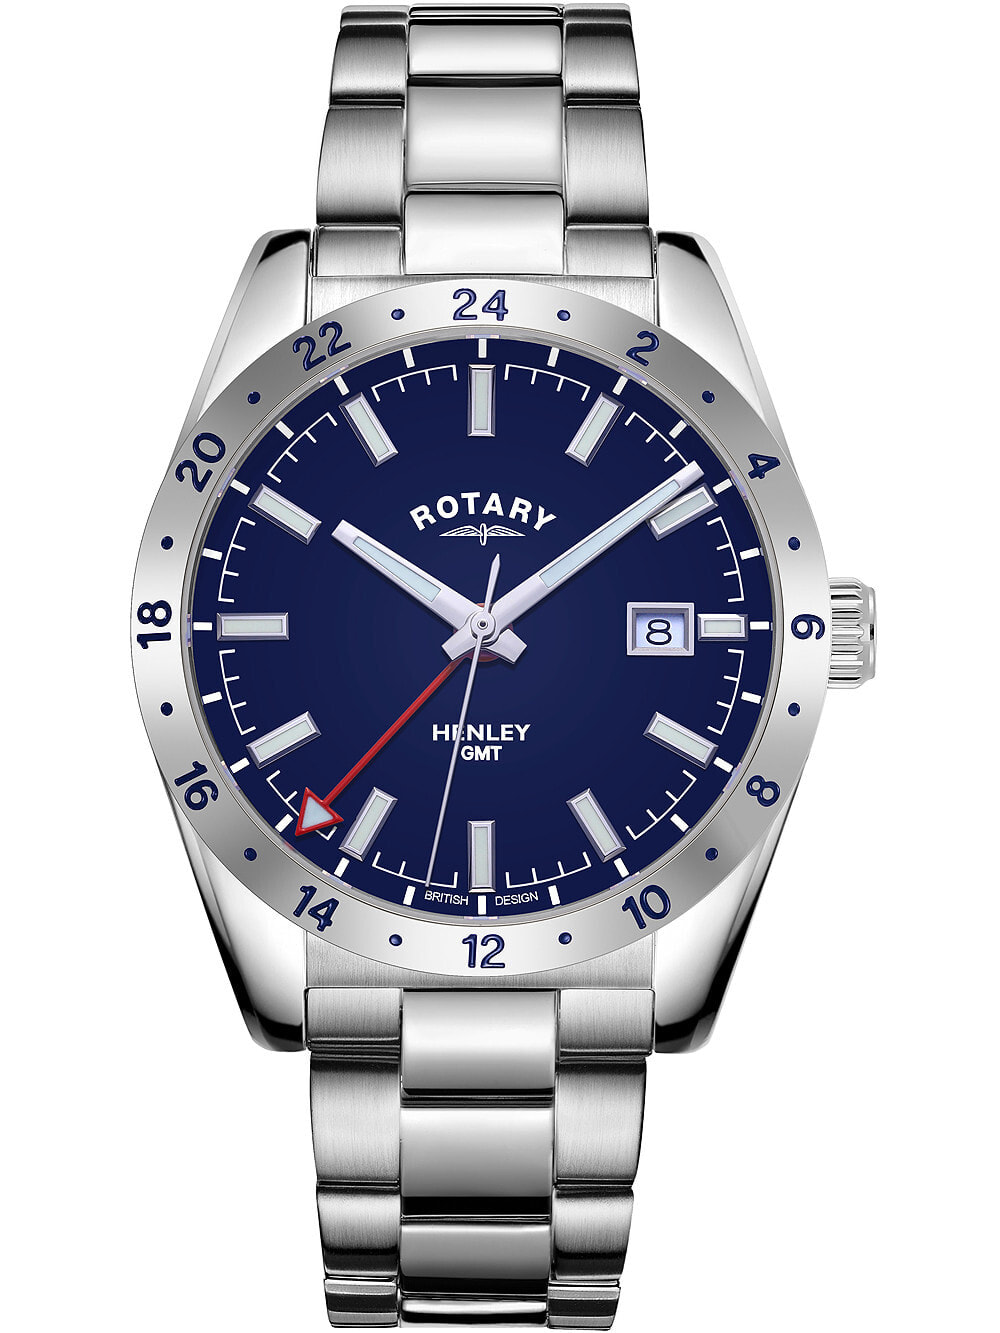 Мужские наручные часы с серебряным браслетом Rotary GB05176/05 Henley GMT mens 40mm 10ATM